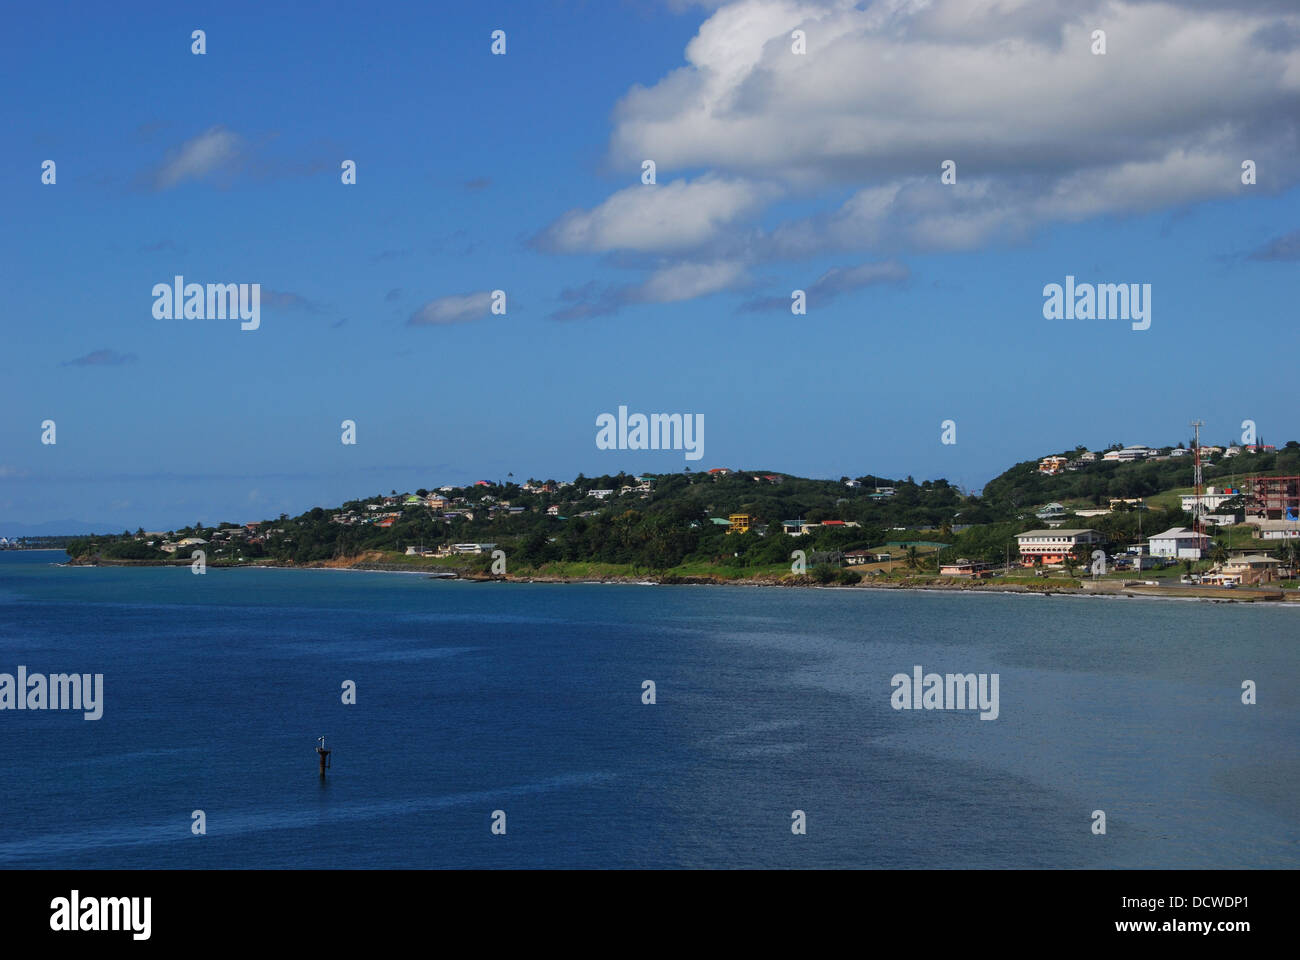 View along the coastline, Scarborough, Tobago, Trinidad and Tobago, Caribbean. Stock Photo